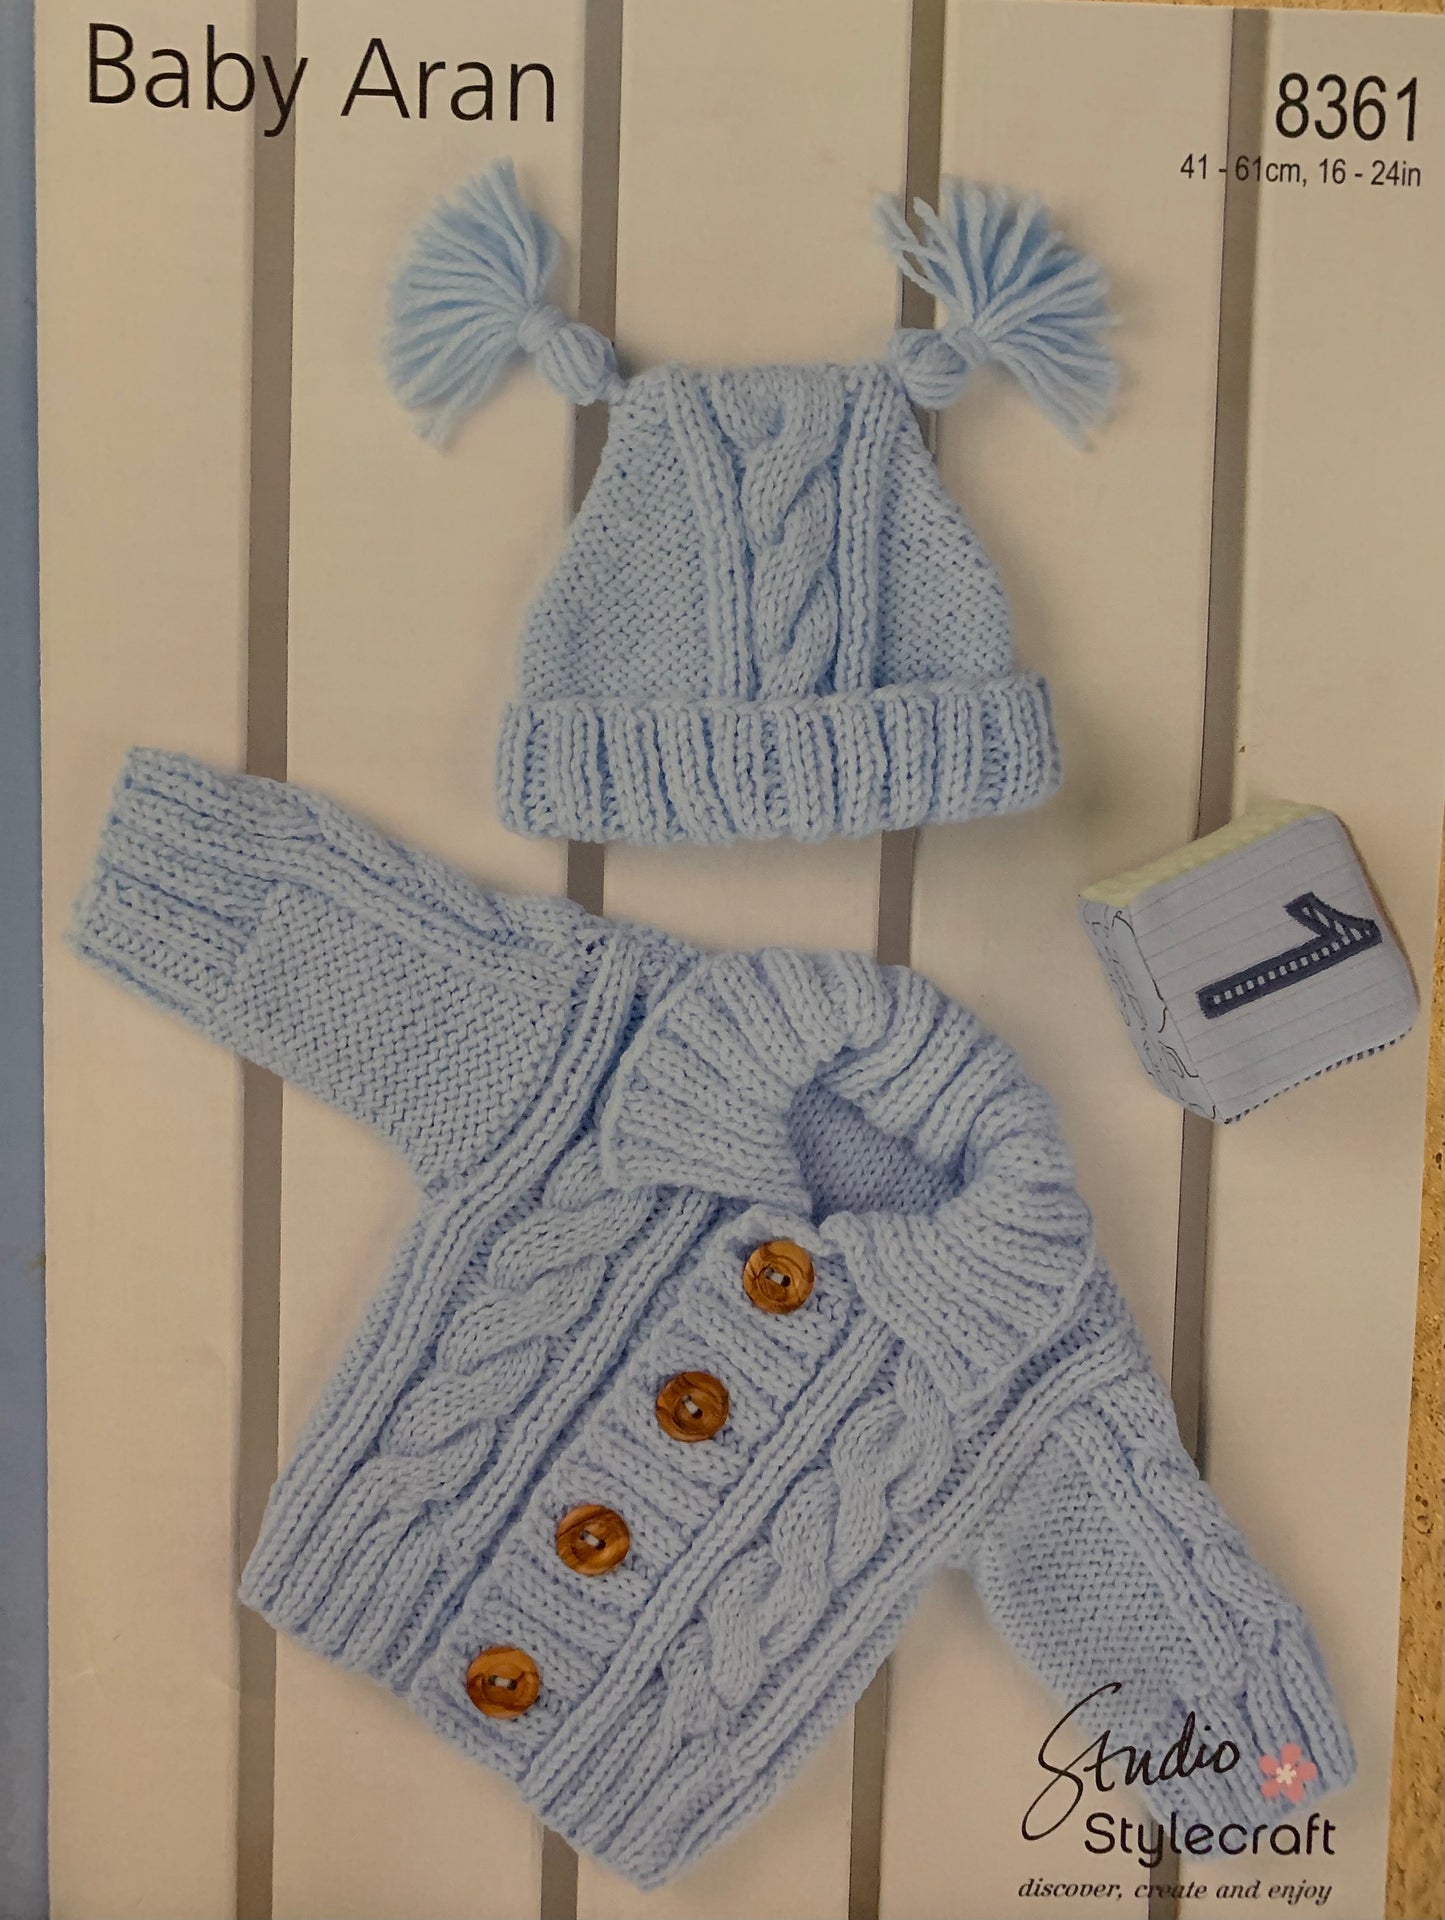 8361 Stylecraft Wondersoft Baby Aran cardigan and hat knitting pattern